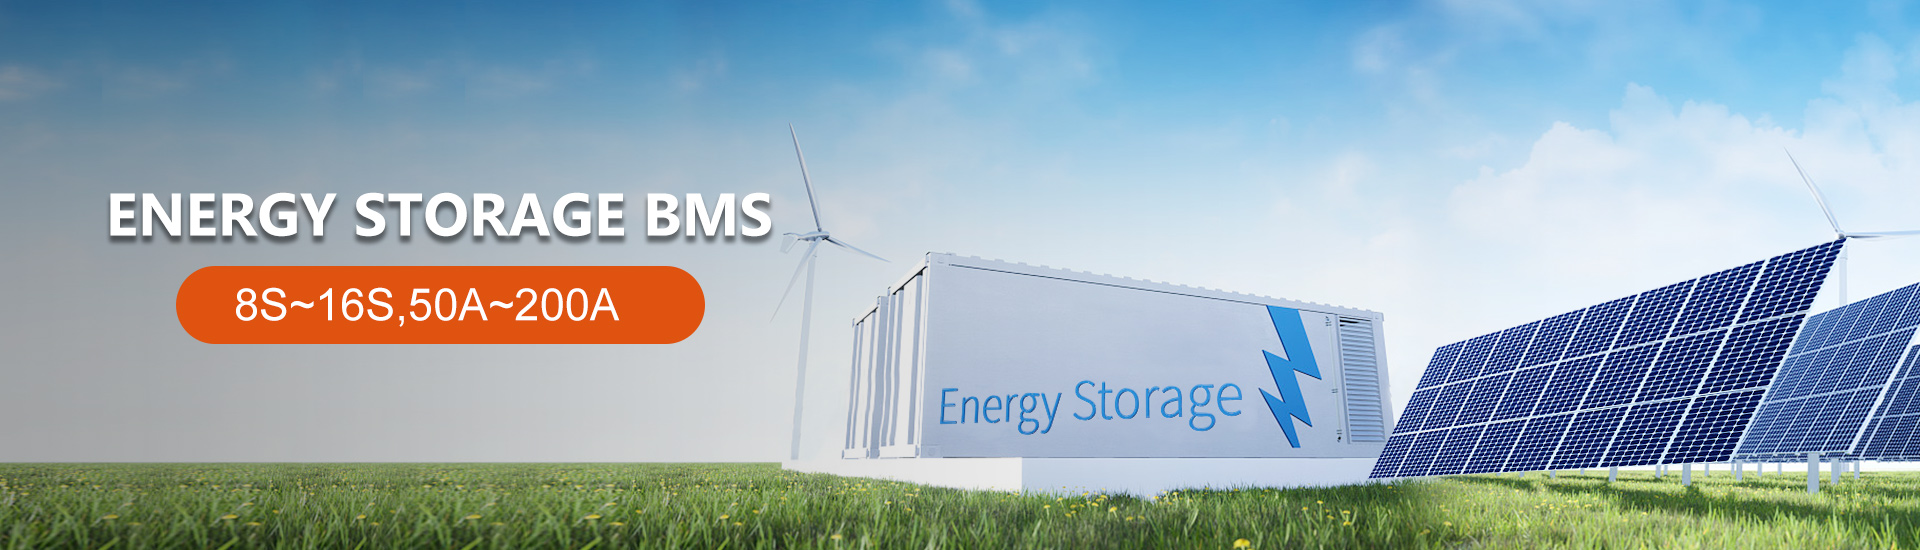 Home Energe Storage BMS